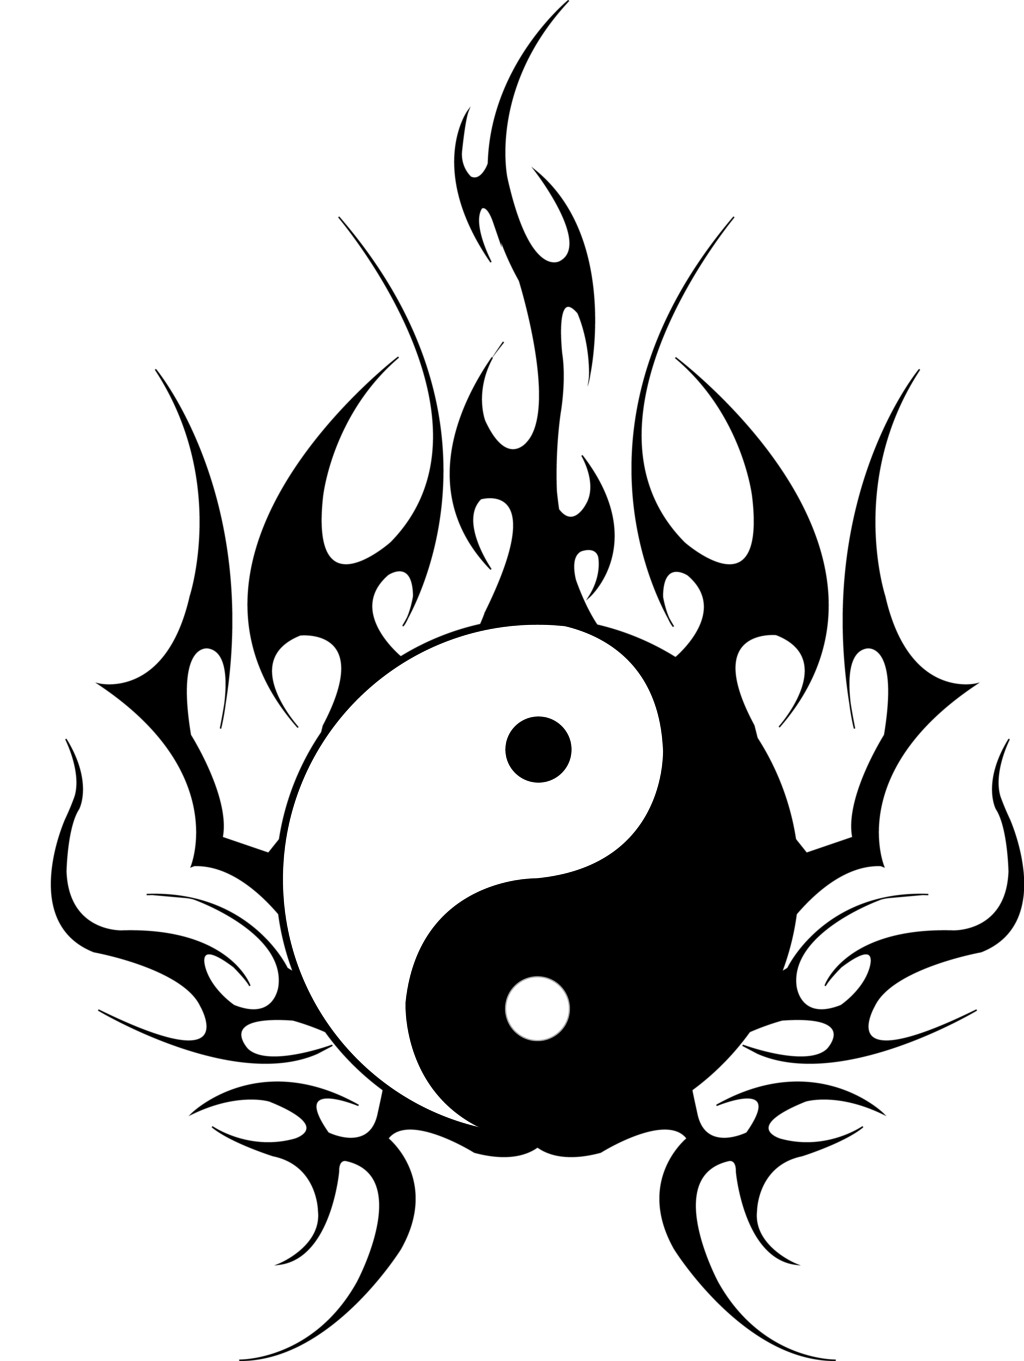 Ying Yang Tattoo Flames icons